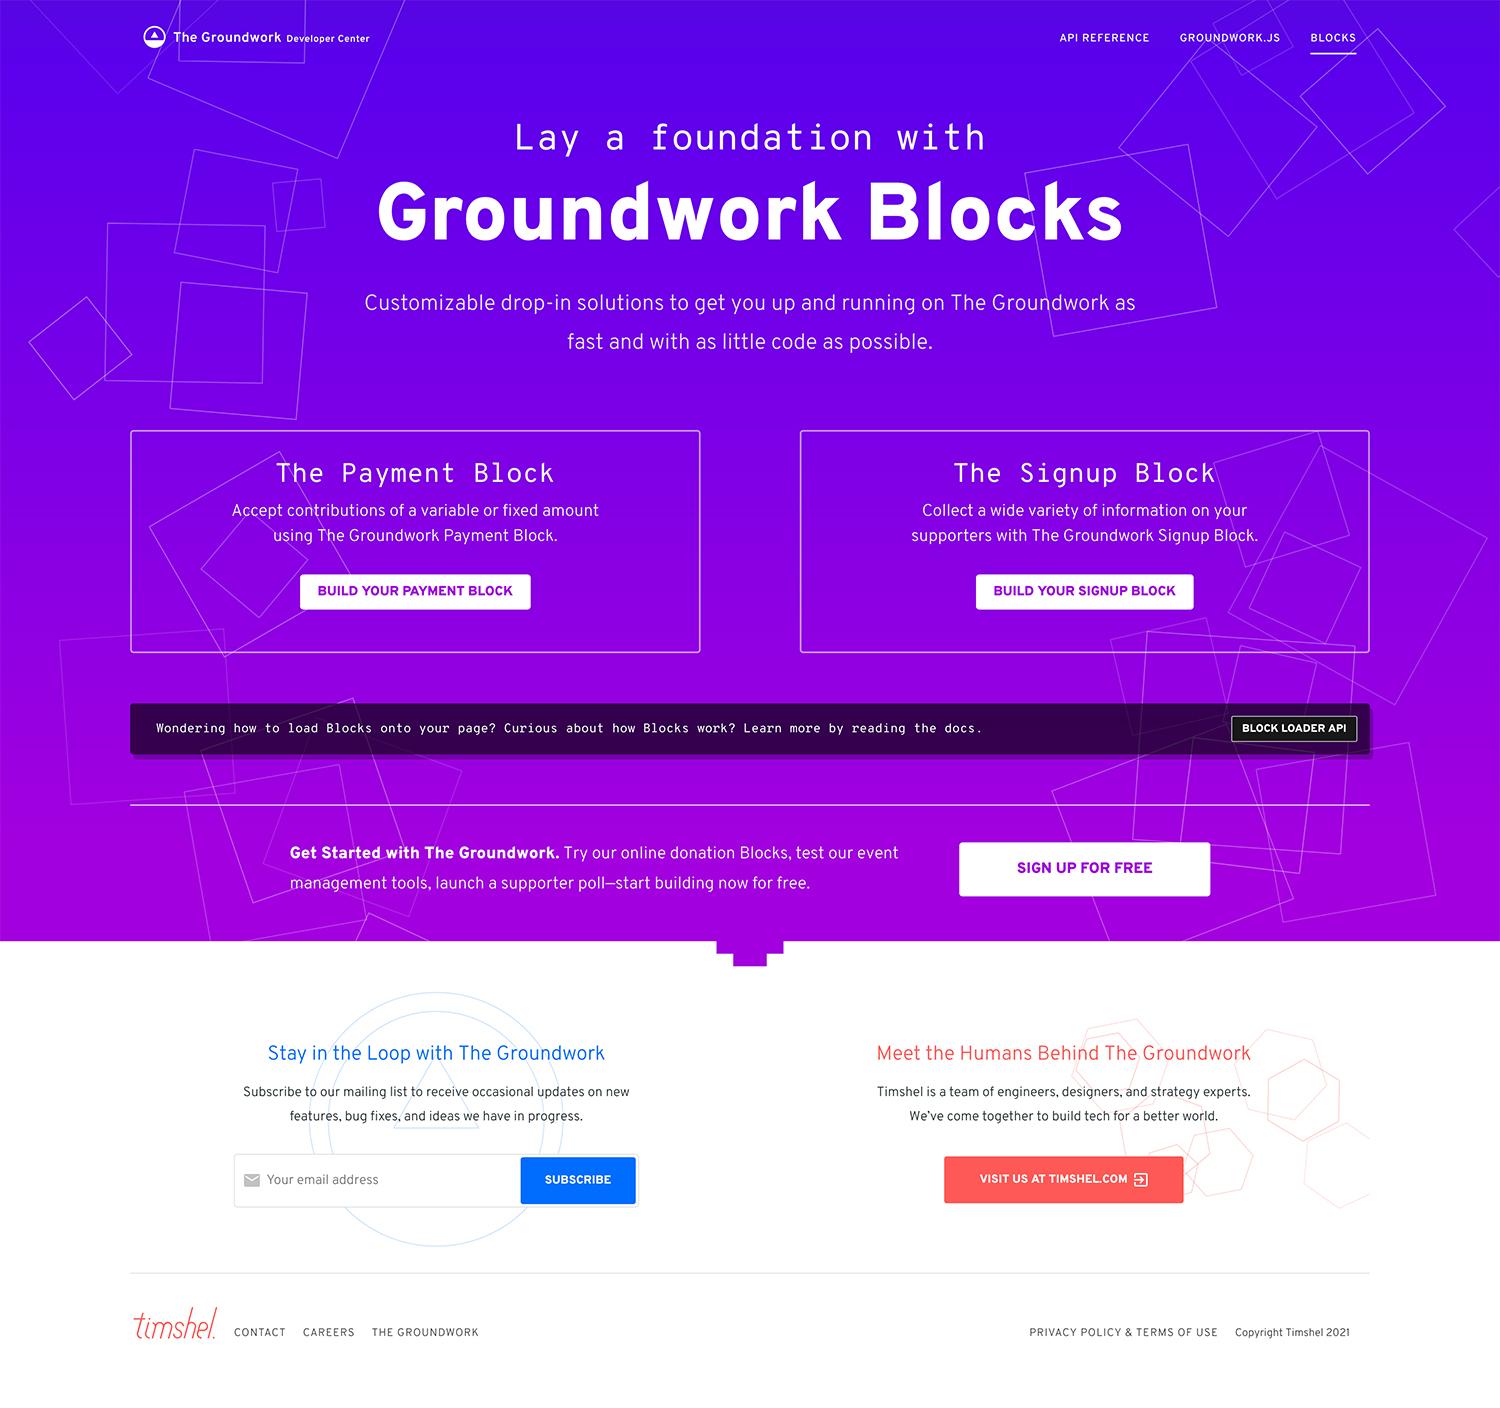 A screenshot of the Blocks page of developer.thegroundwork.com